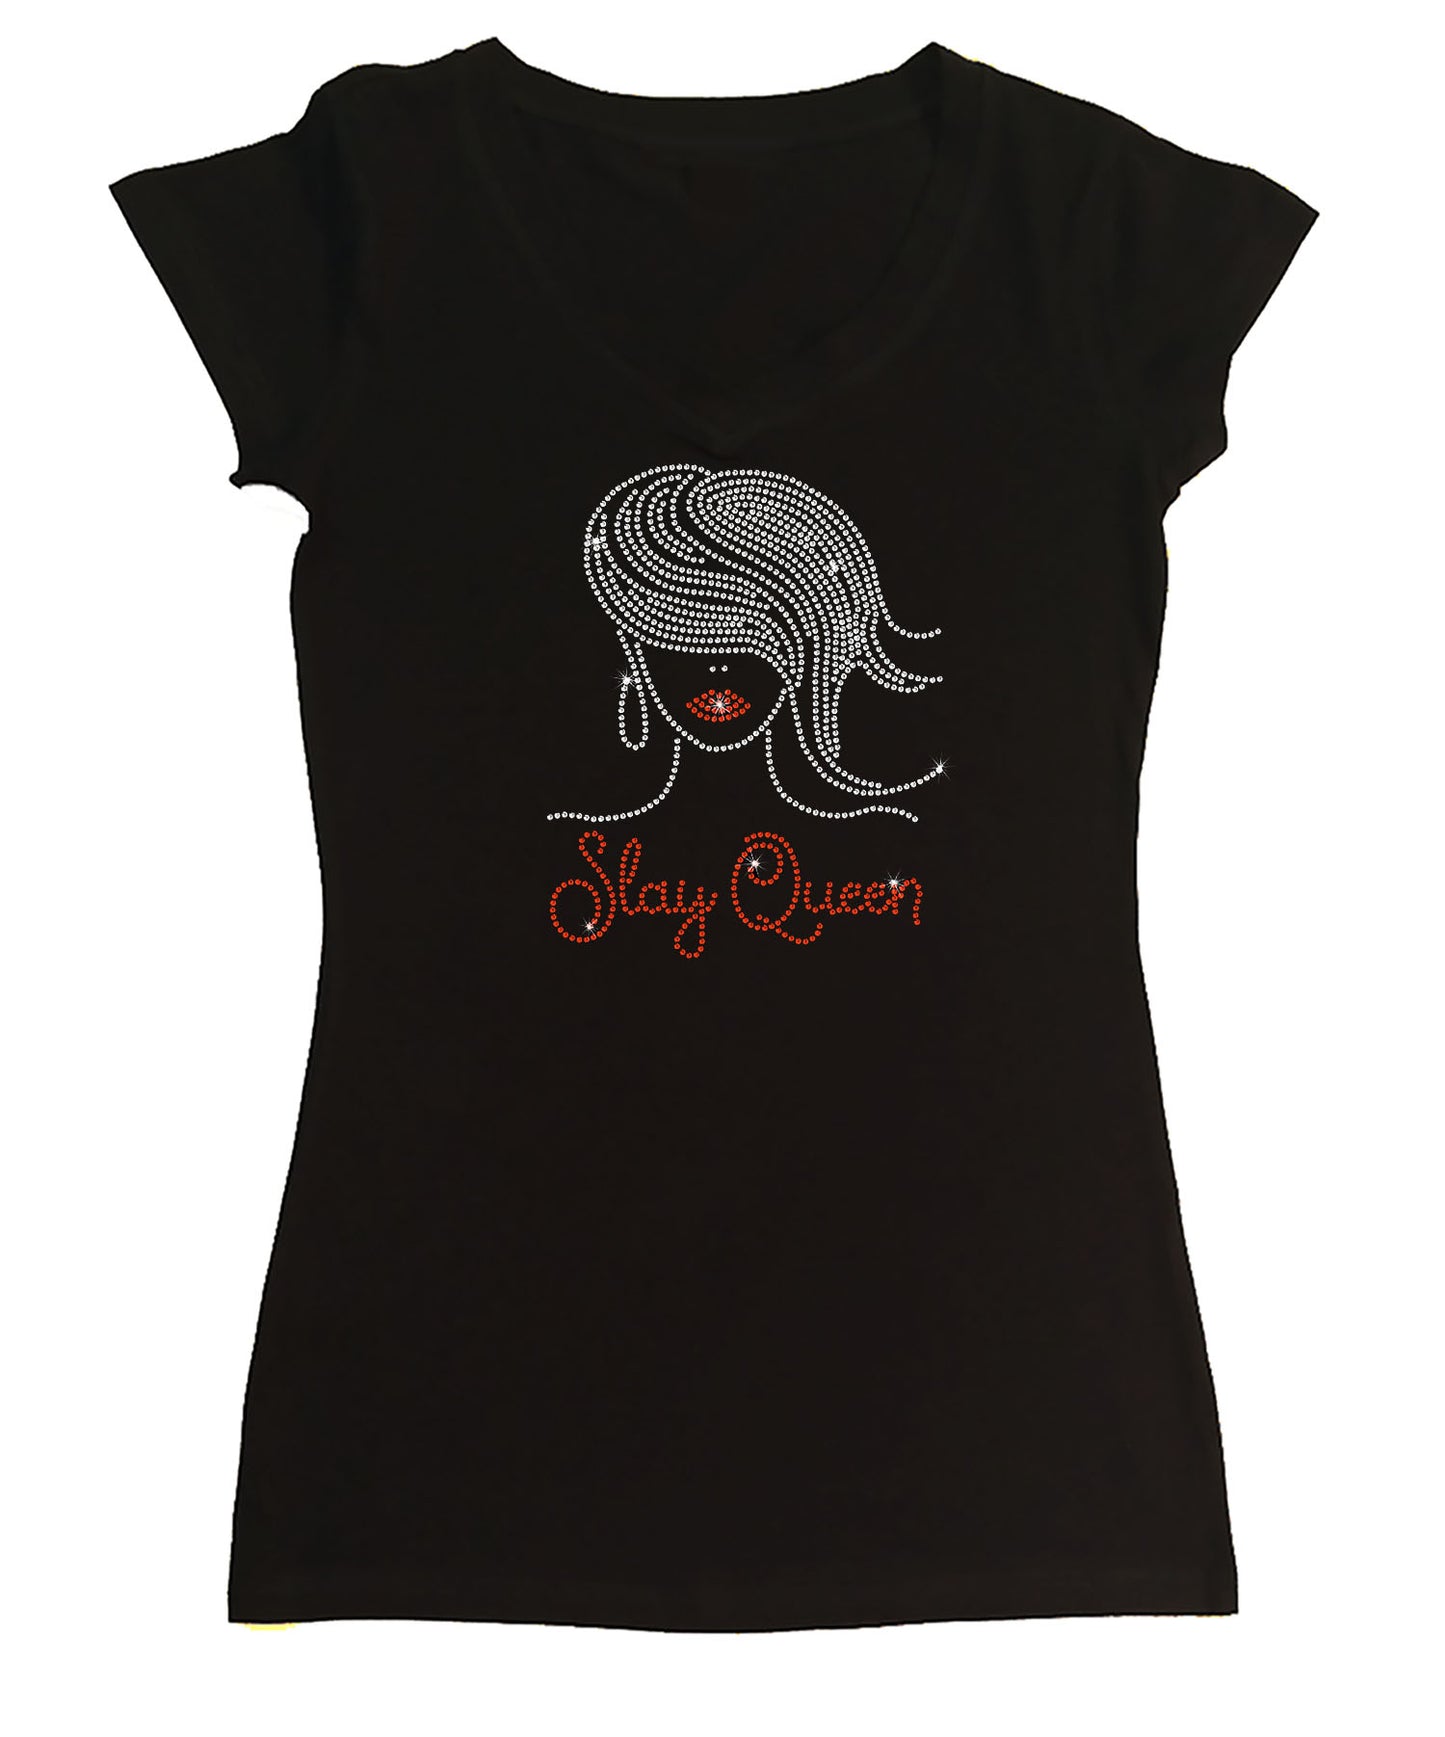 Womens T-shirt with Slay Queen Women  in Rhinestones